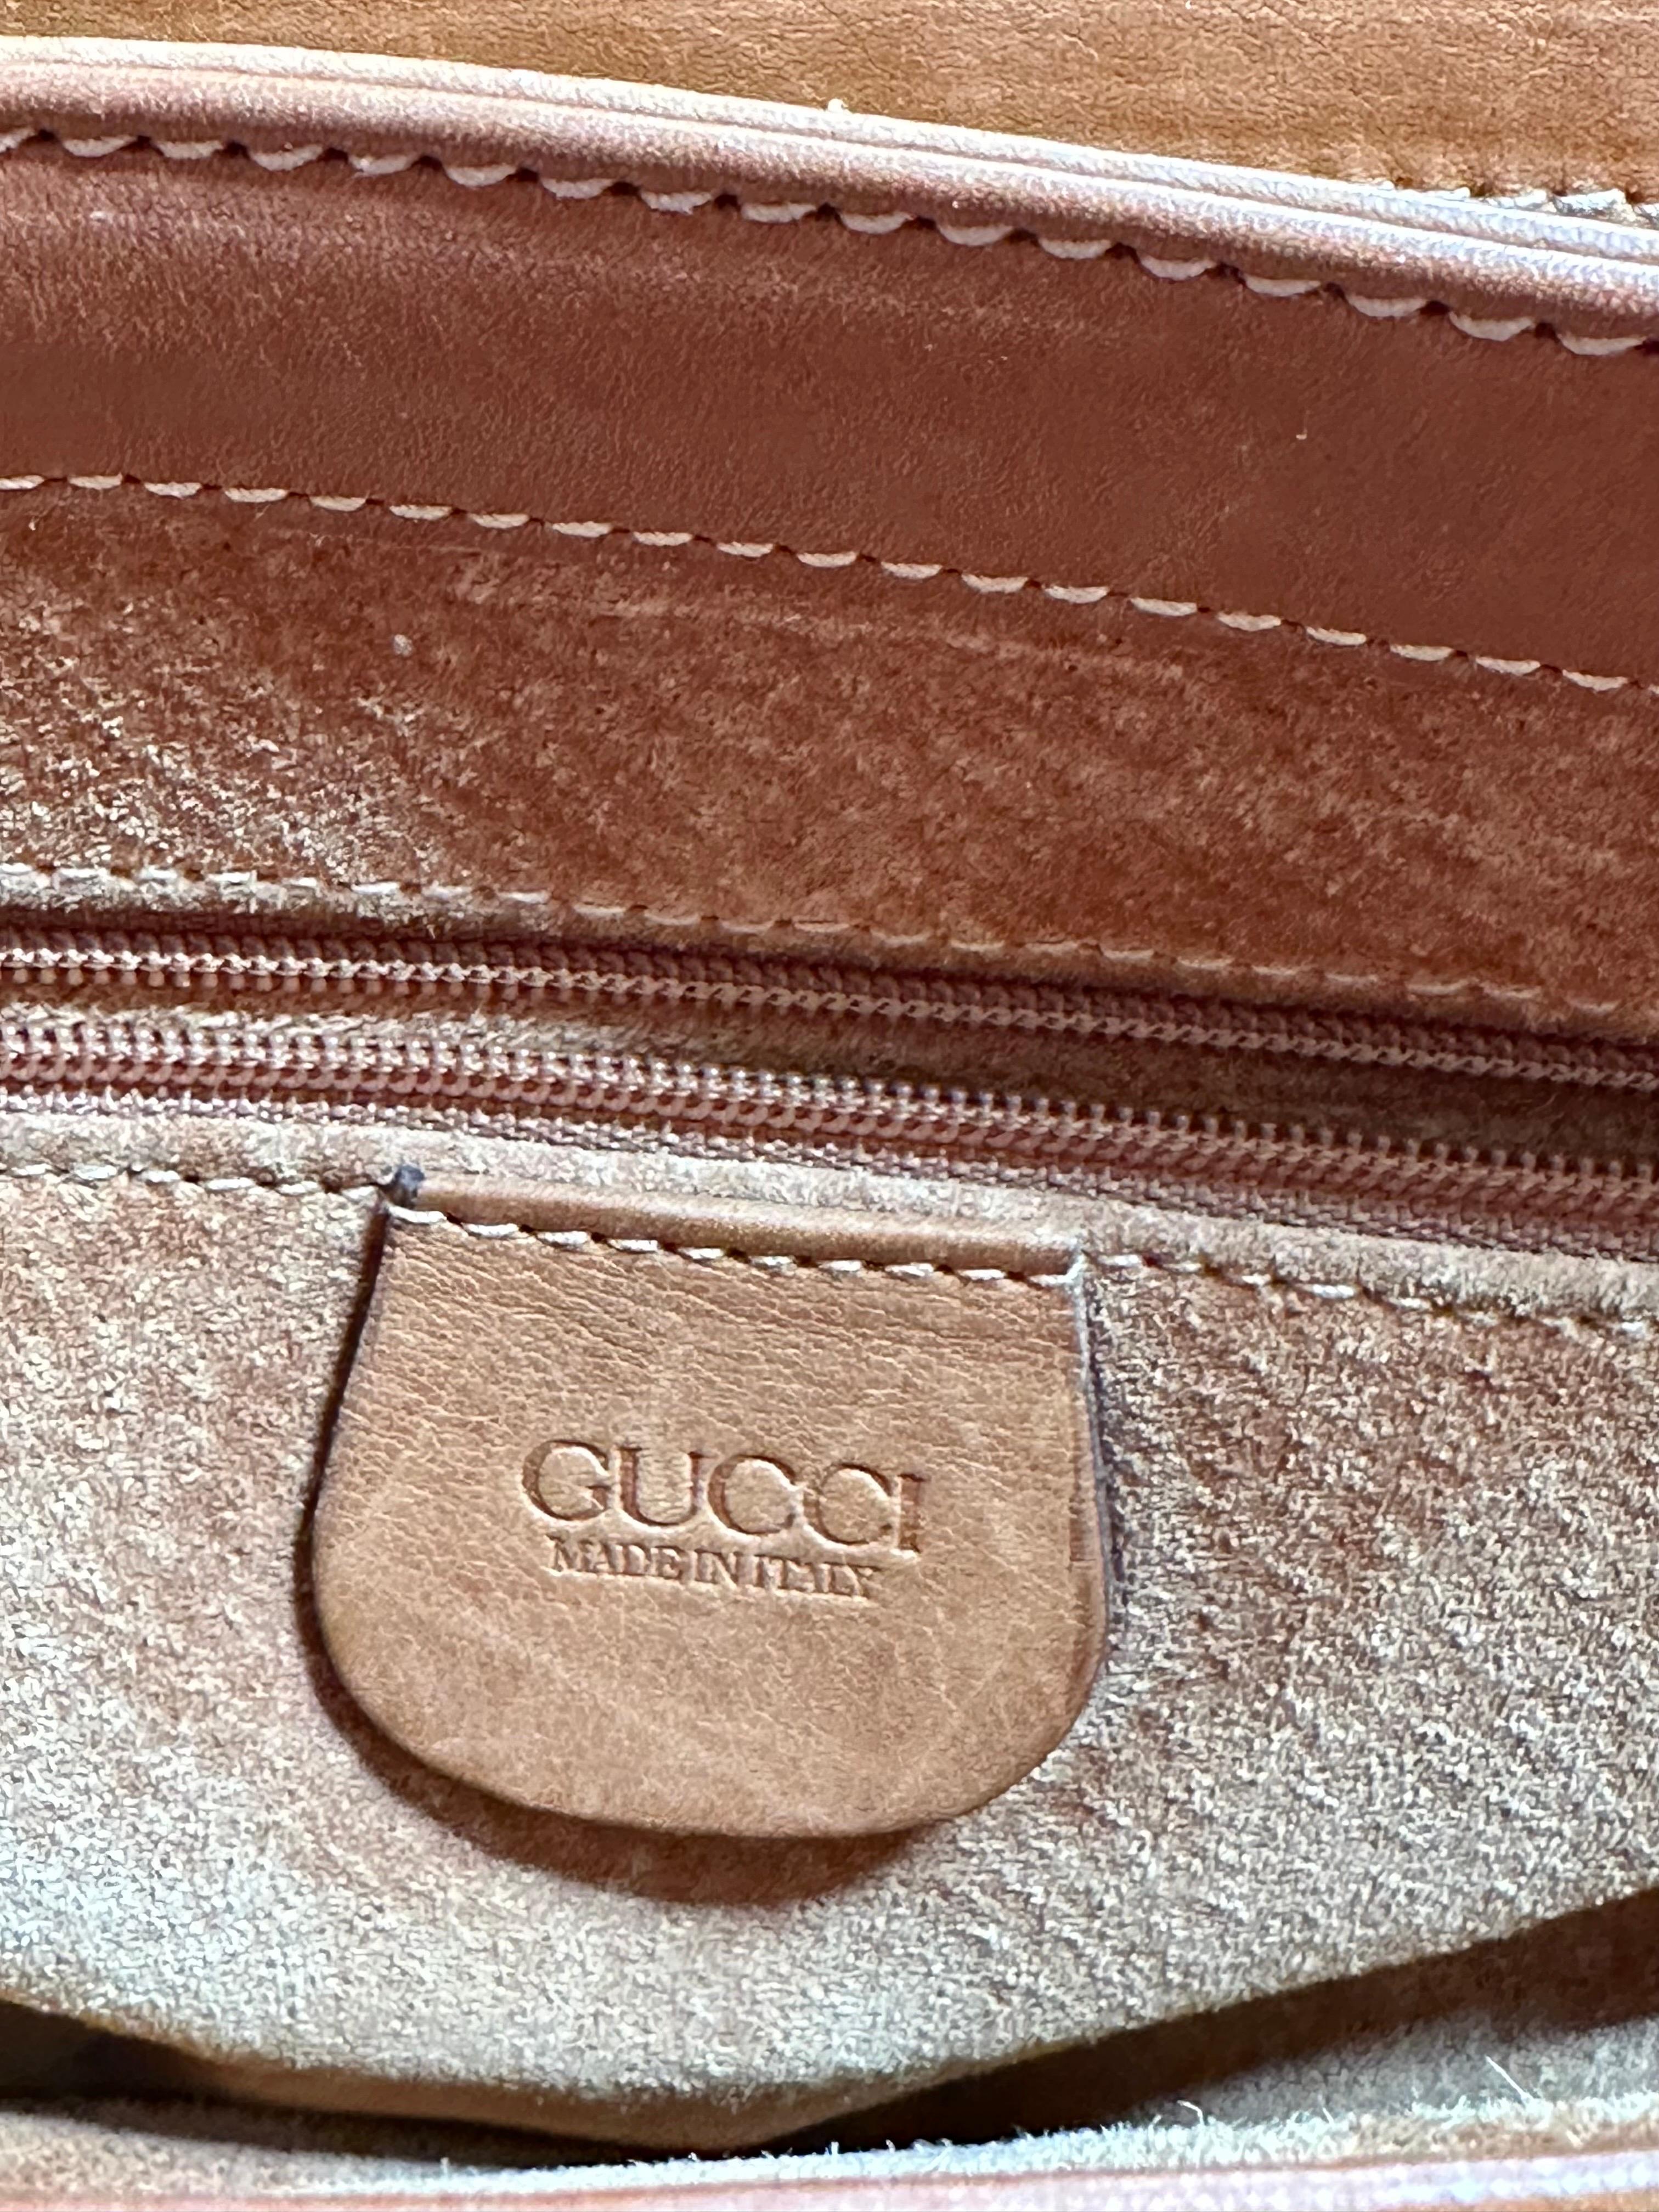 Vintage Gucci tan leather/ Brass / Fabric handbag estimated mid 1970’s 5